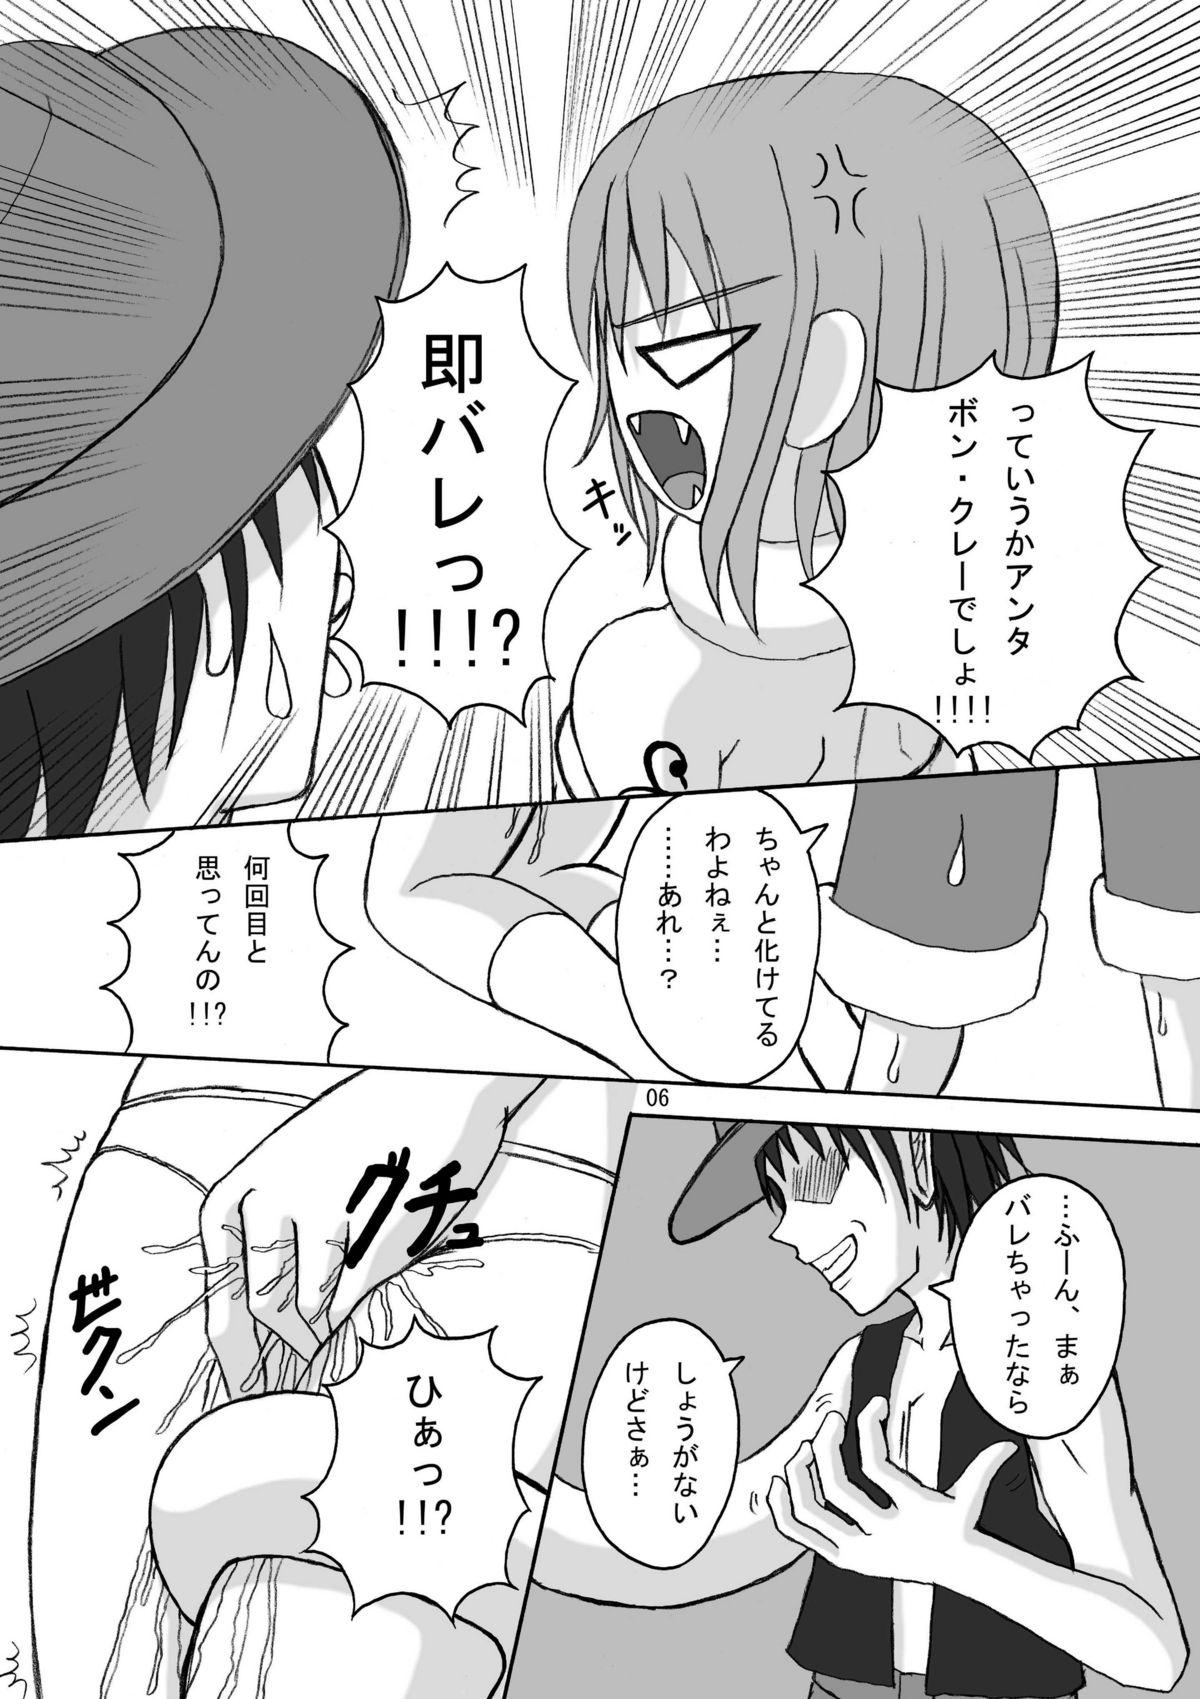 Oiled Jump Tales 5 San P Nami Baku More Condom Nami vs Gear3 vs Marunomi Hebihime - One piece Hot Women Fucking - Page 5